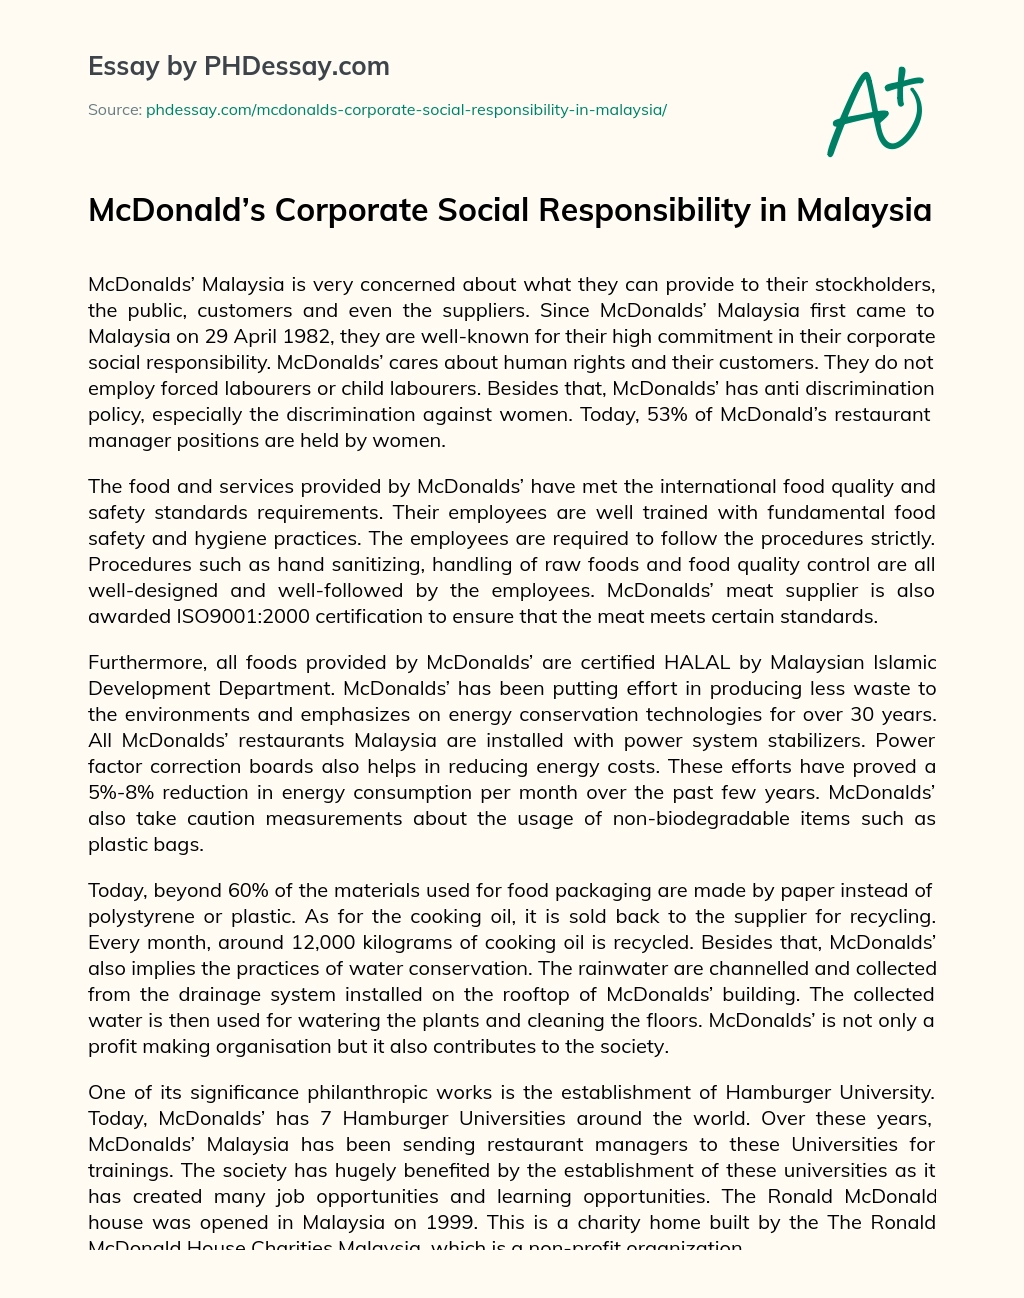 McDonald’s Corporate Social Responsibility in Malaysia essay